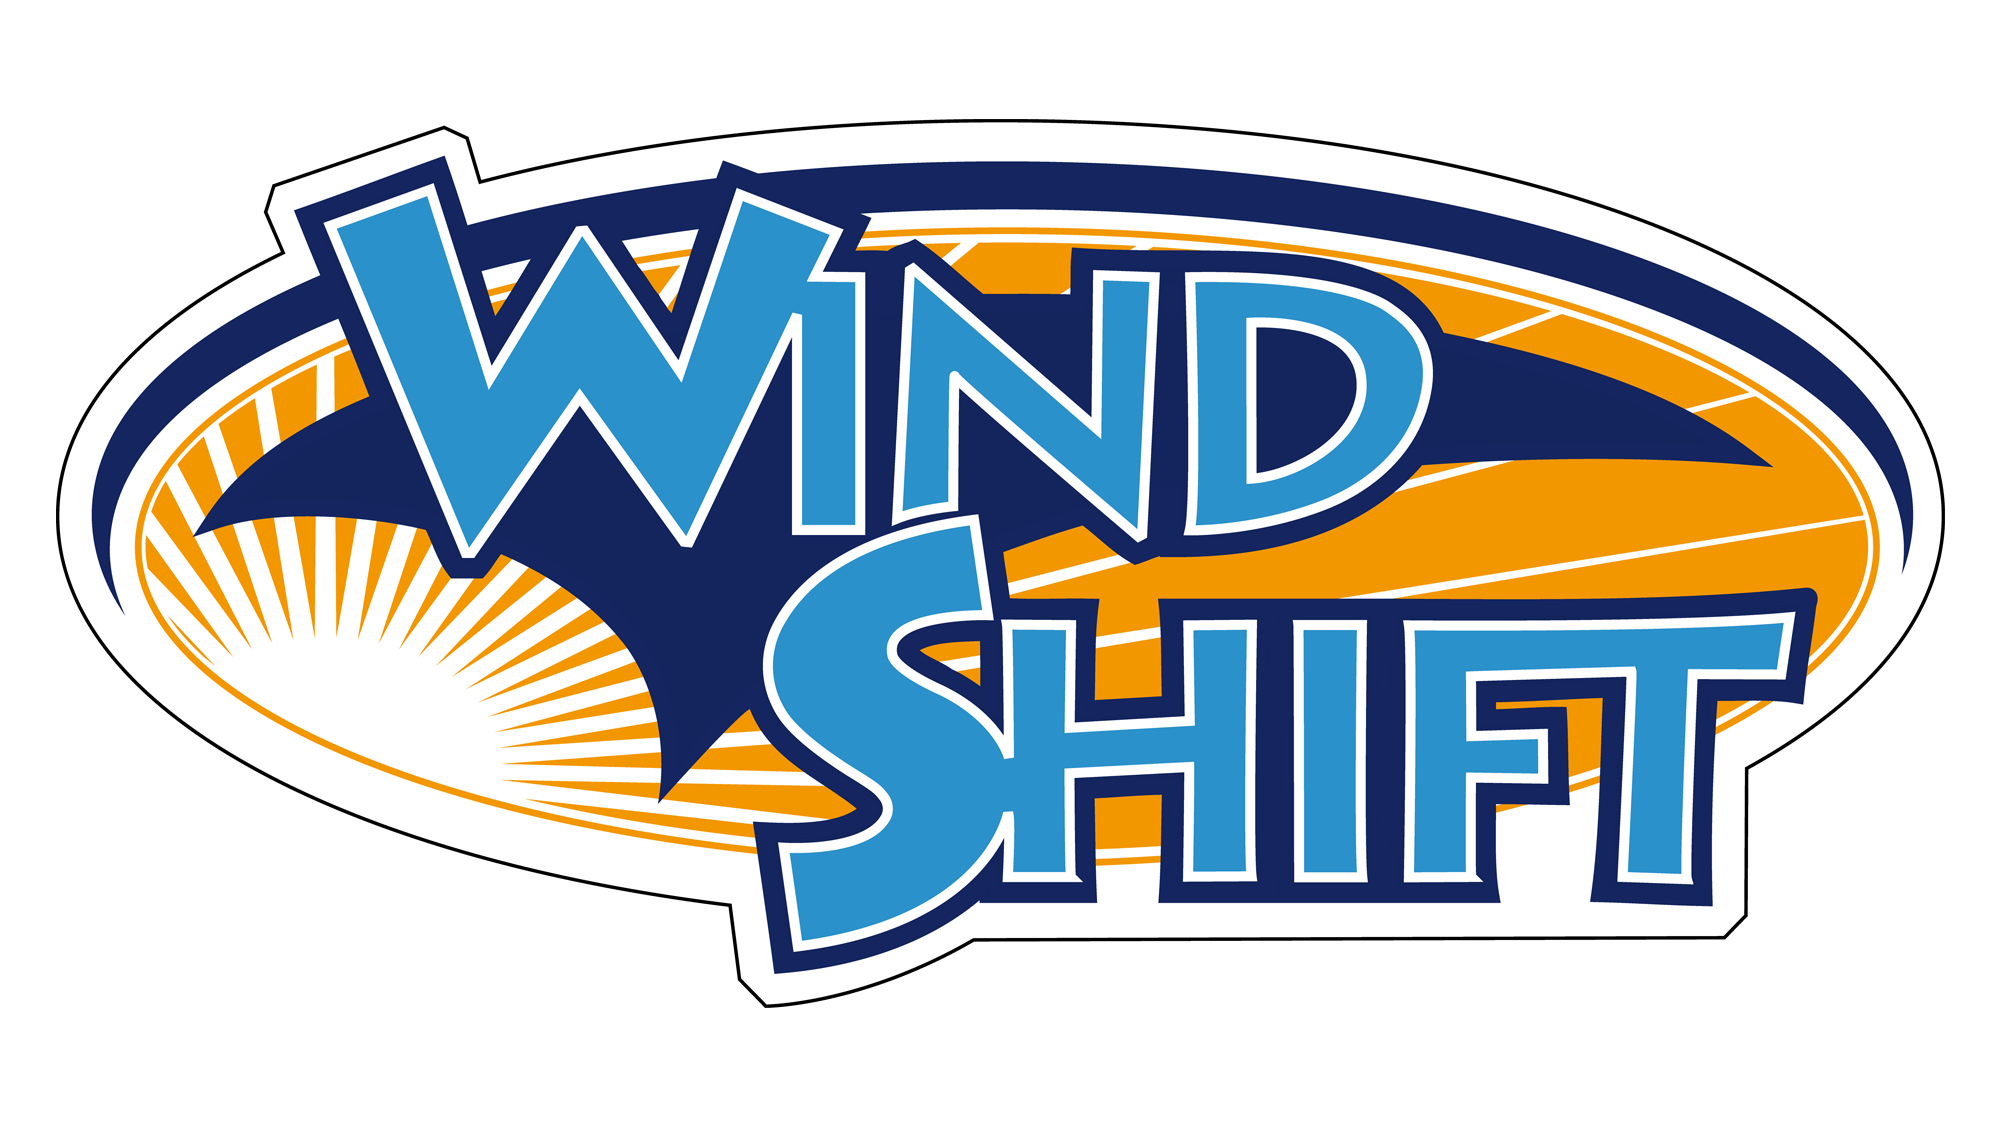 Windshift